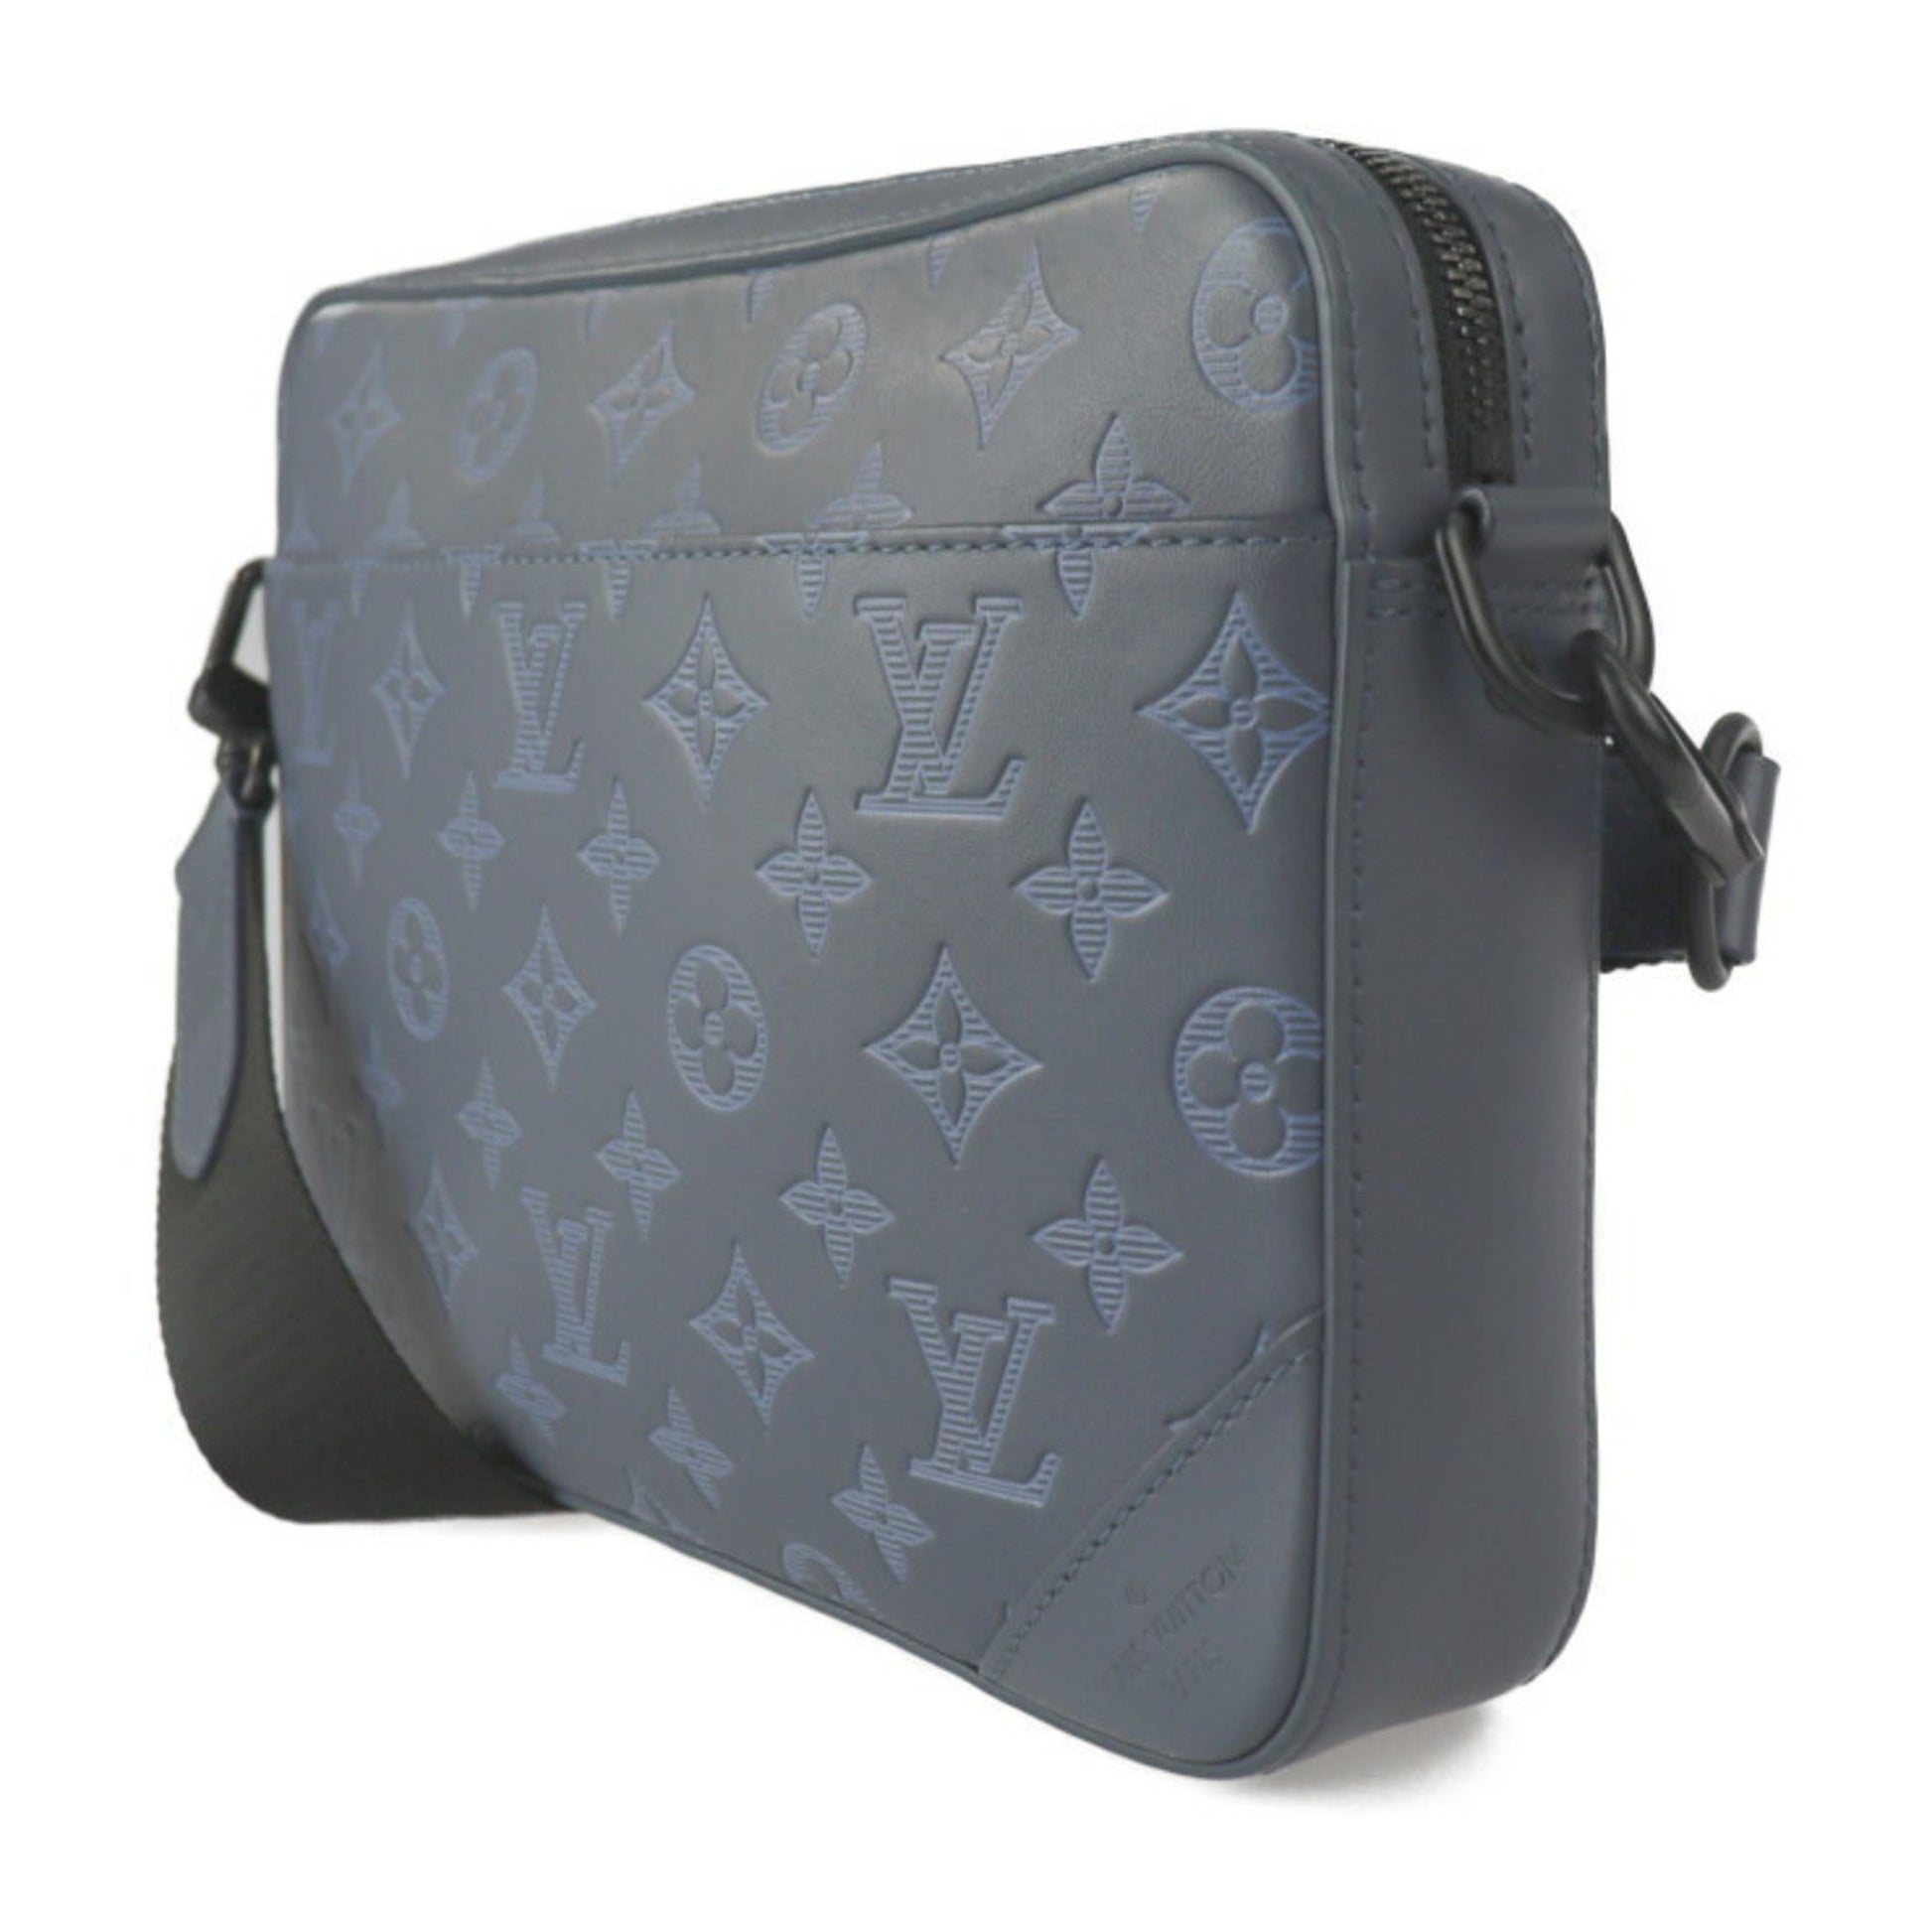 Duo Messenger Bag - Luxury Crossbody Bags - Bags